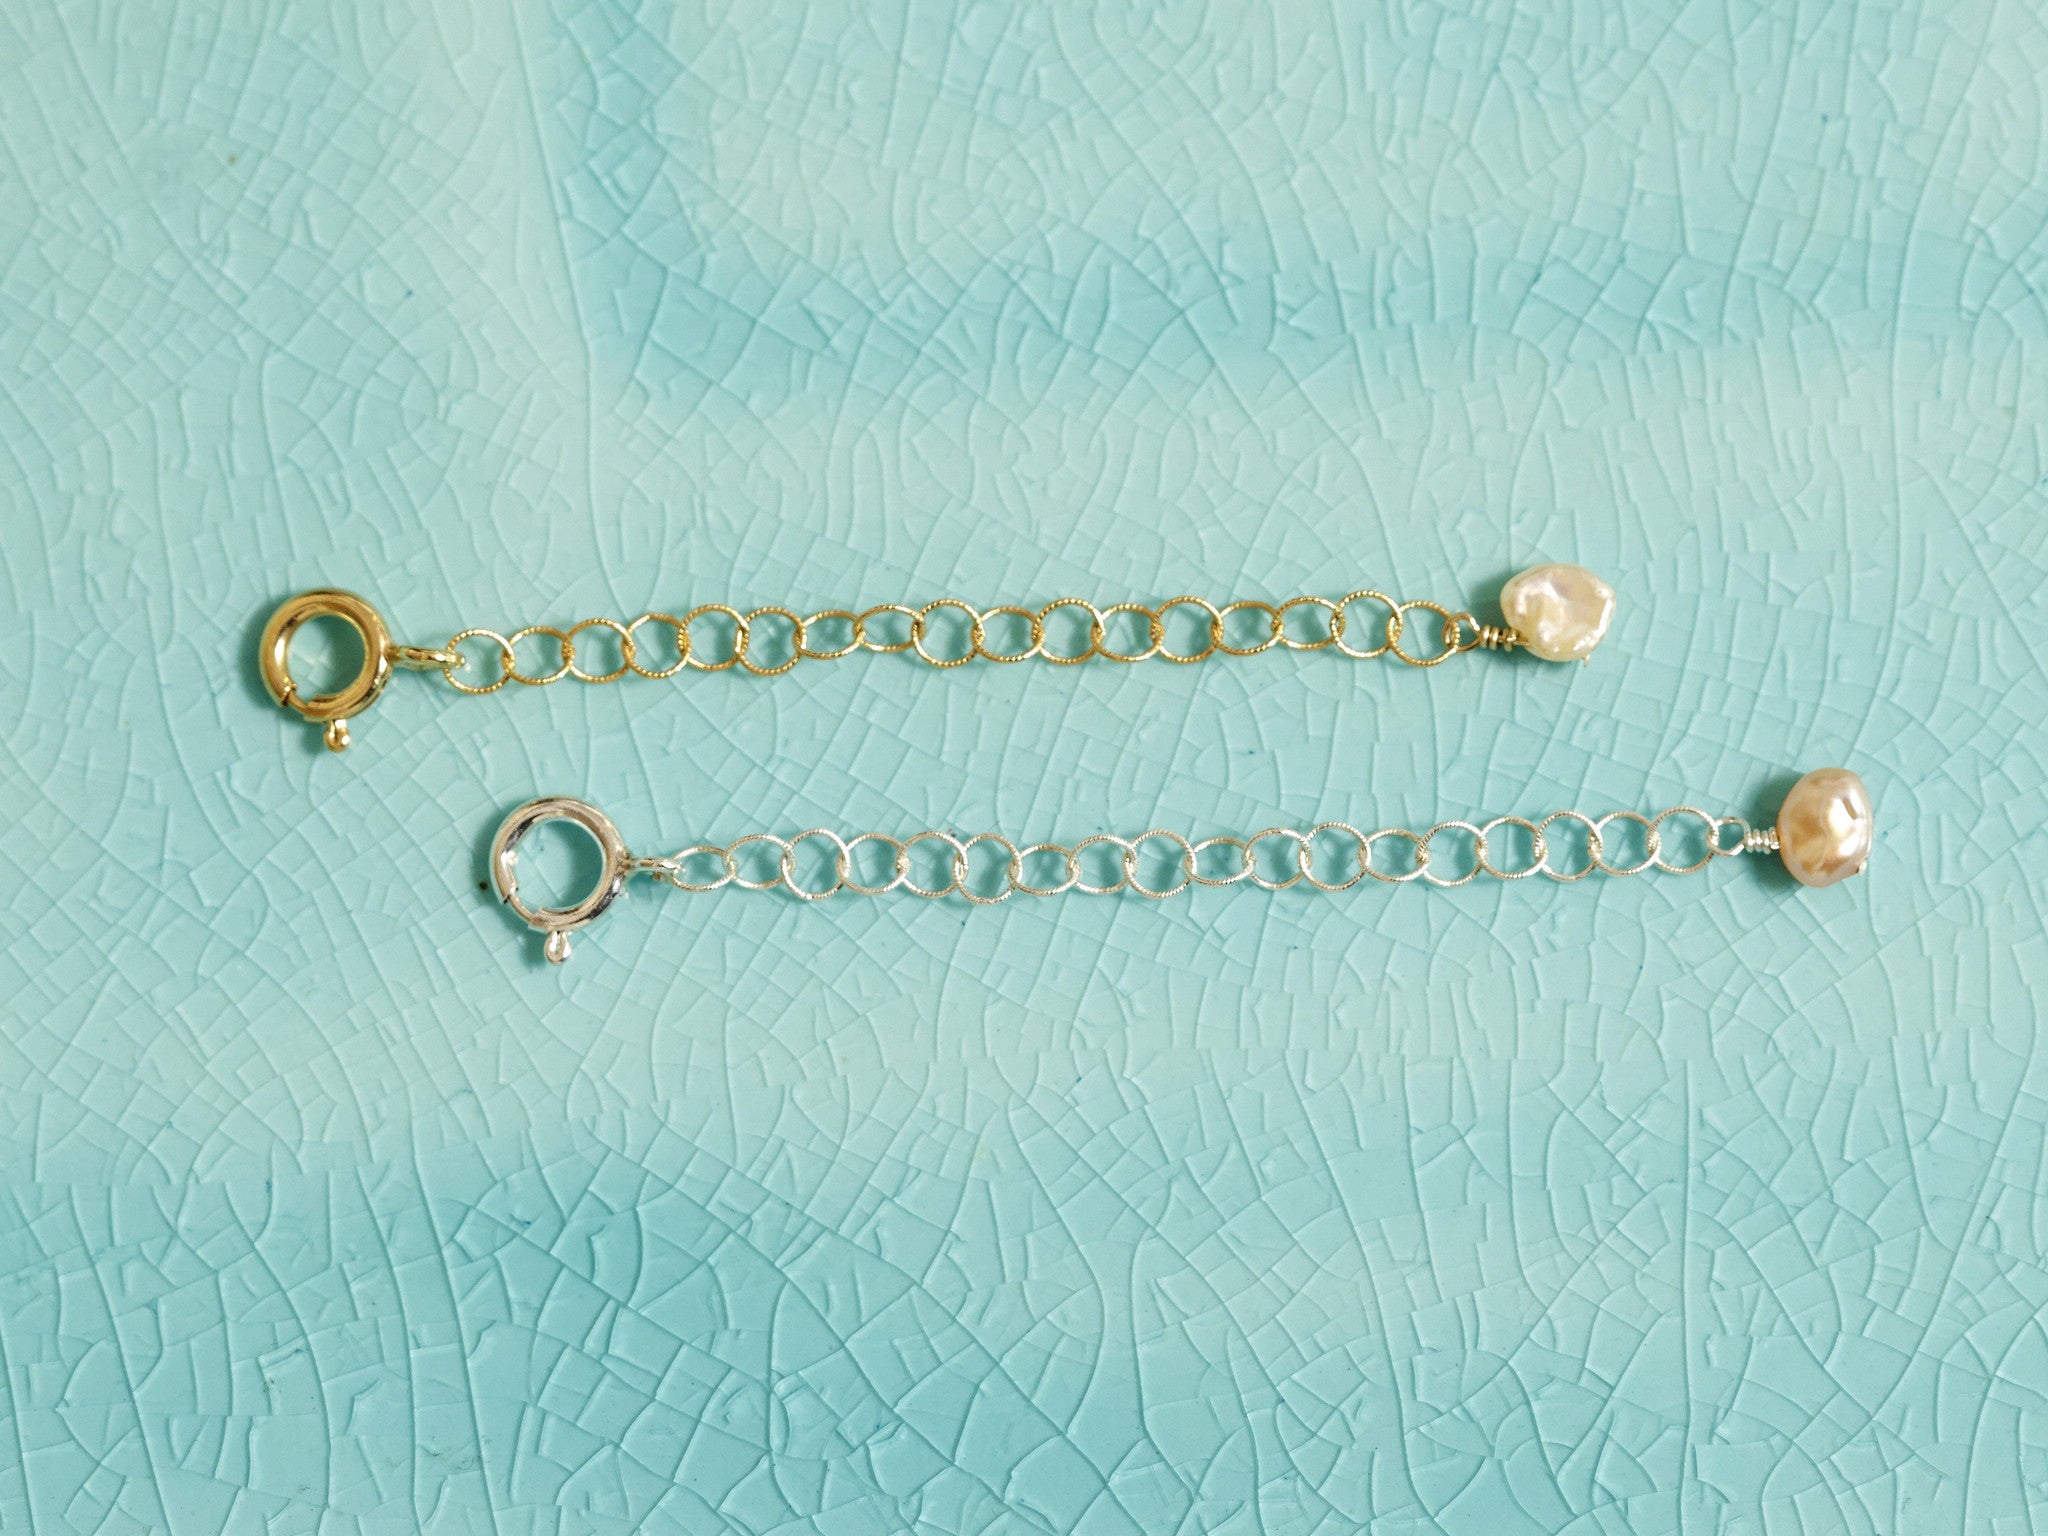 Necklace Chain Extender – Baleen